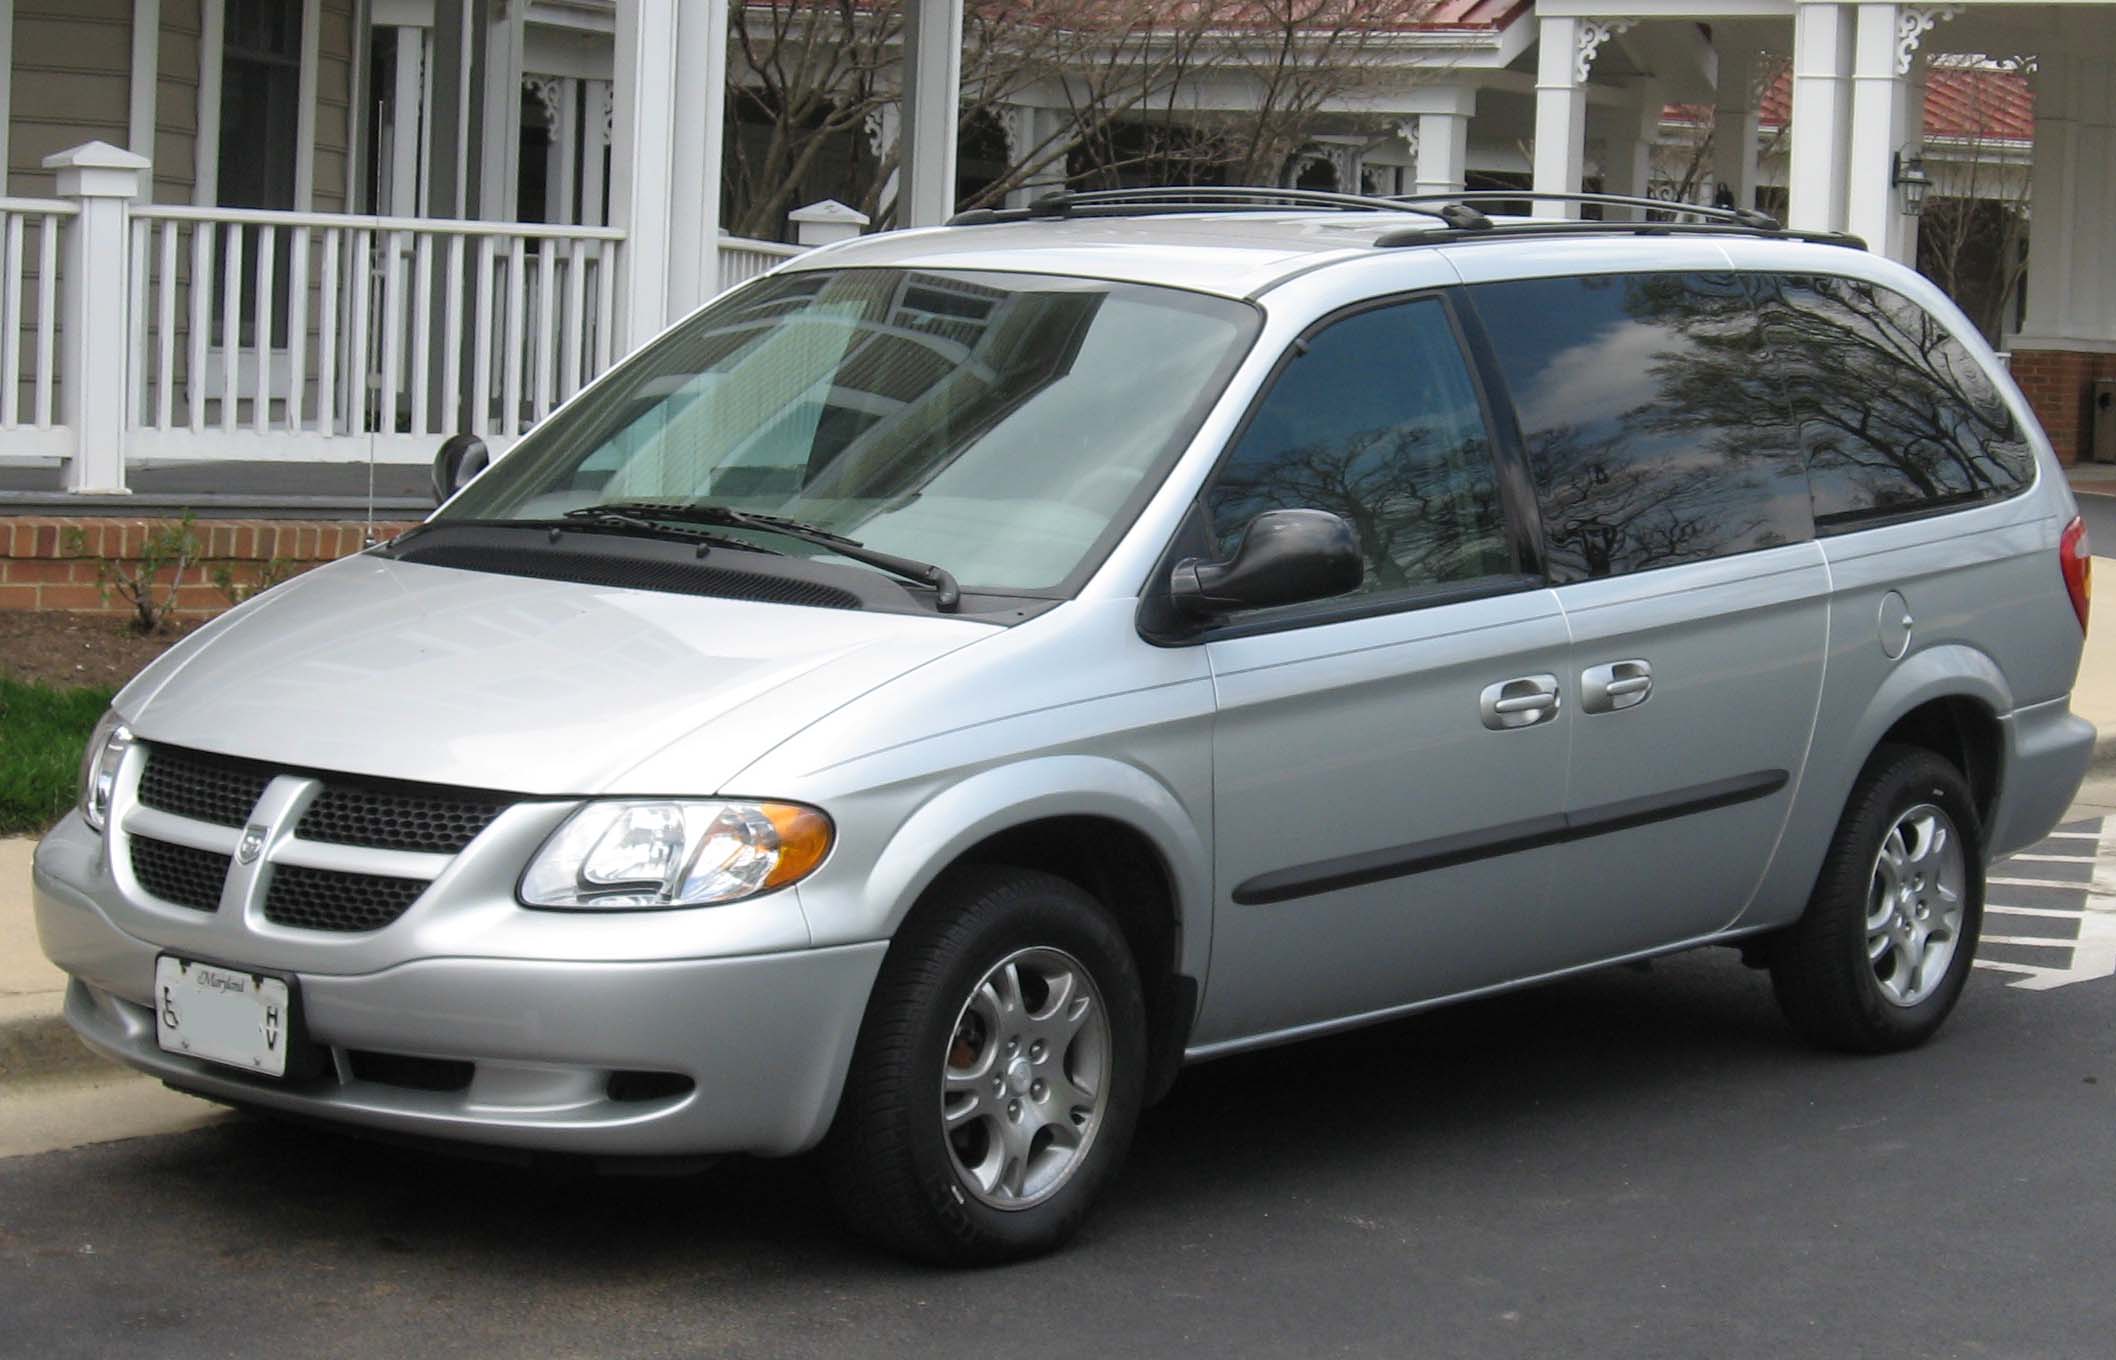 File:2001-2004 Dodge Grand Caravan.jpg - Wikimedia Commons